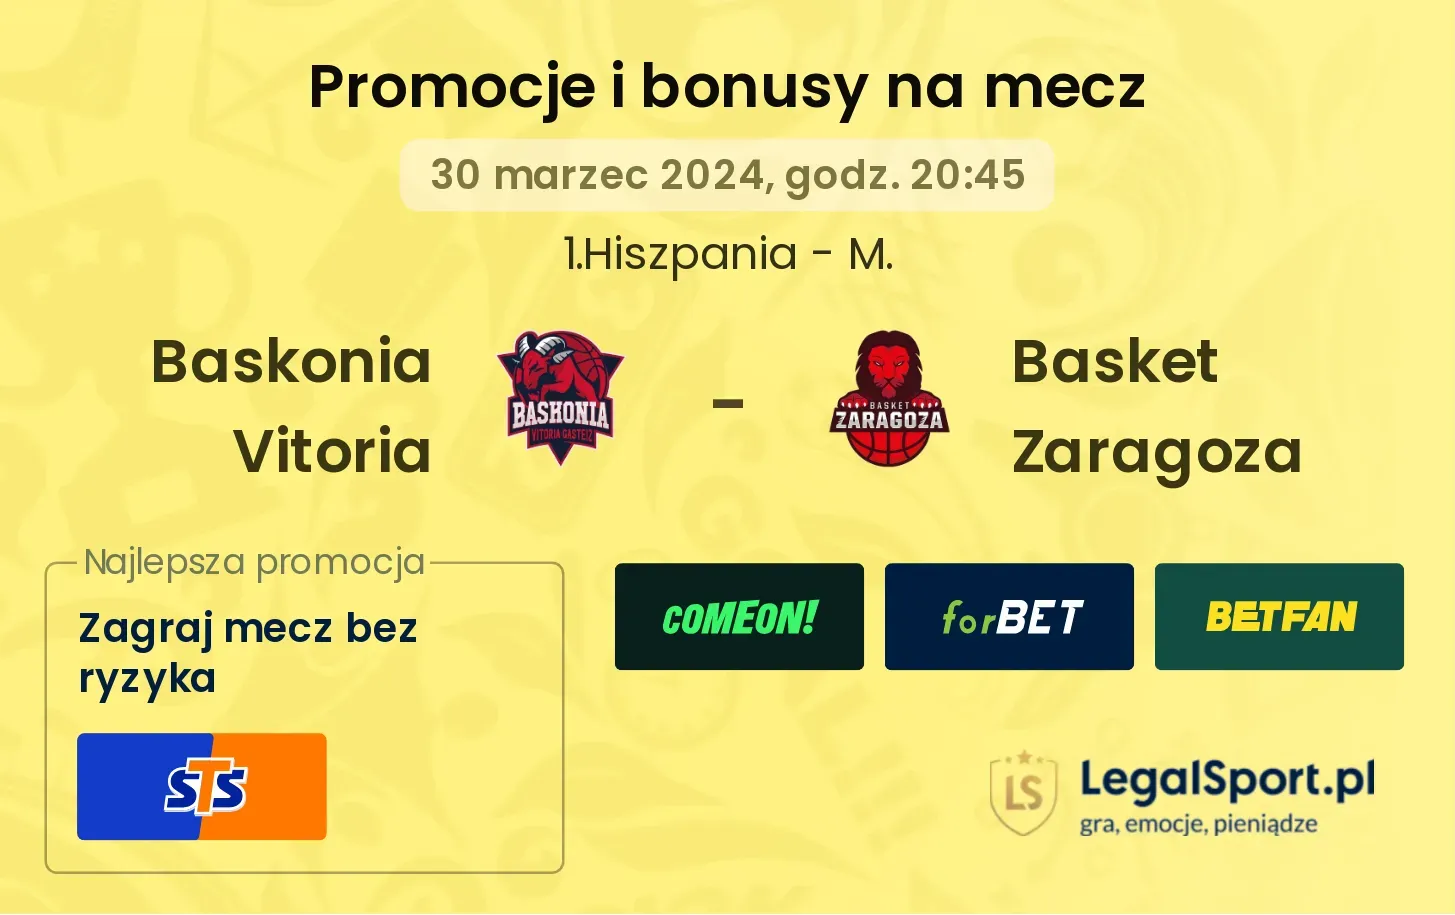 Baskonia Vitoria - Basket Zaragoza promocje bonusy na mecz